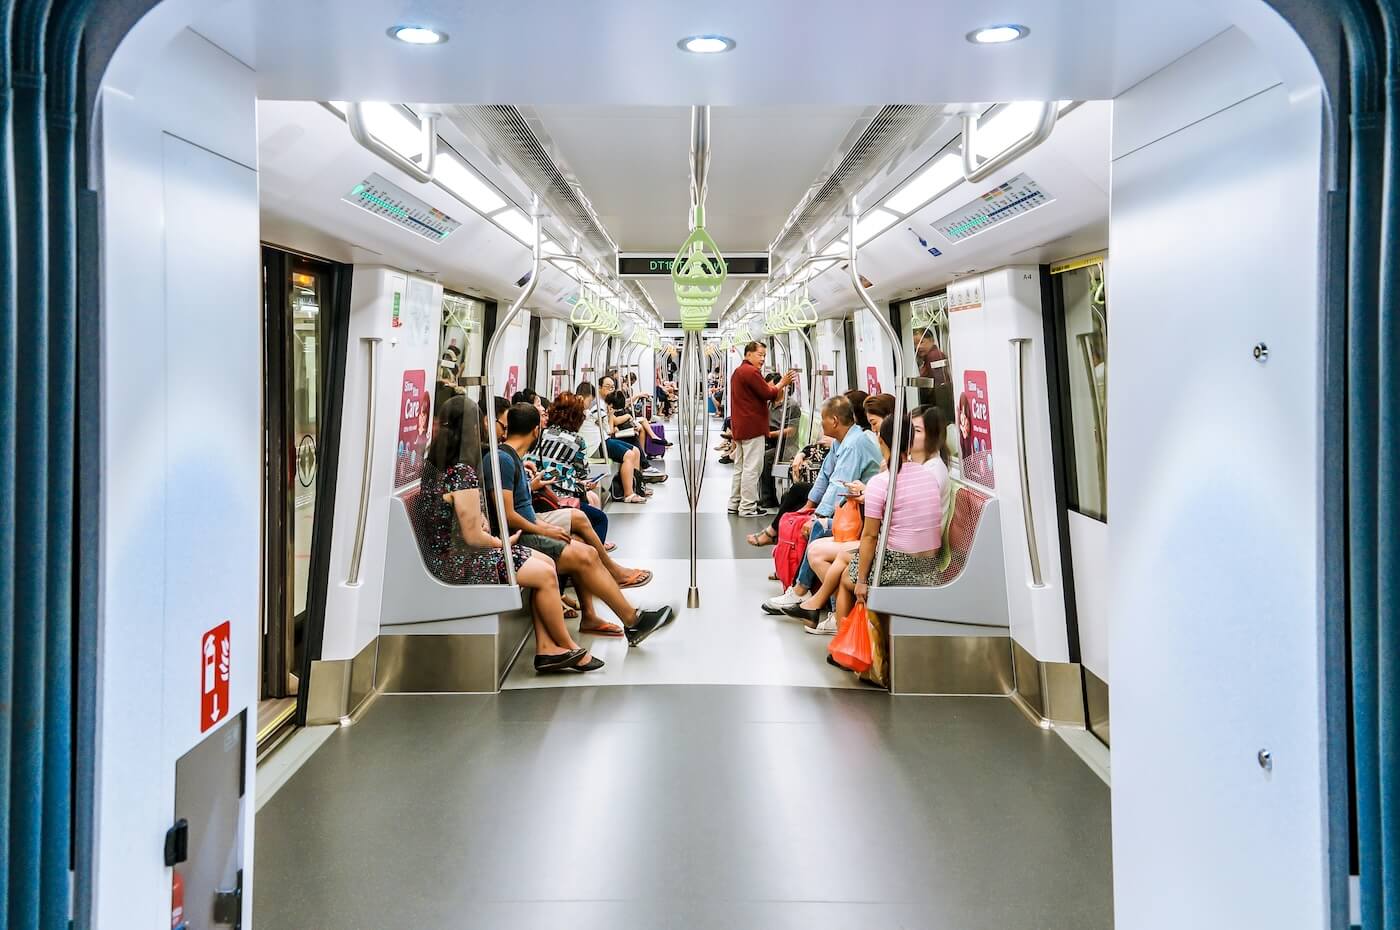 Passengers on an MRT train in Singapore